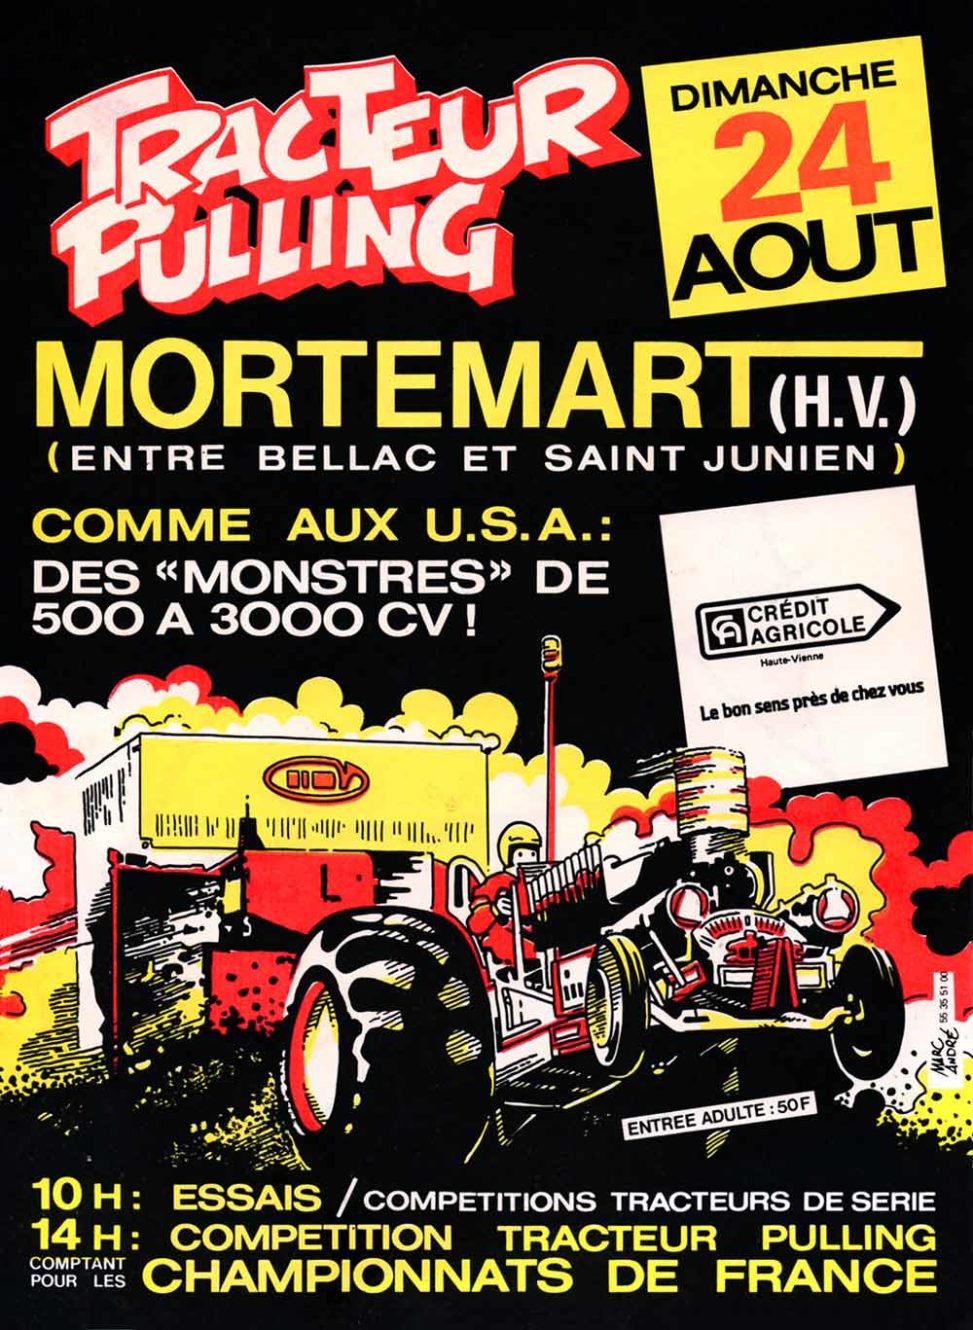 Tracteur Pulling Mortemart flyer et affiche 1986 Marc-André